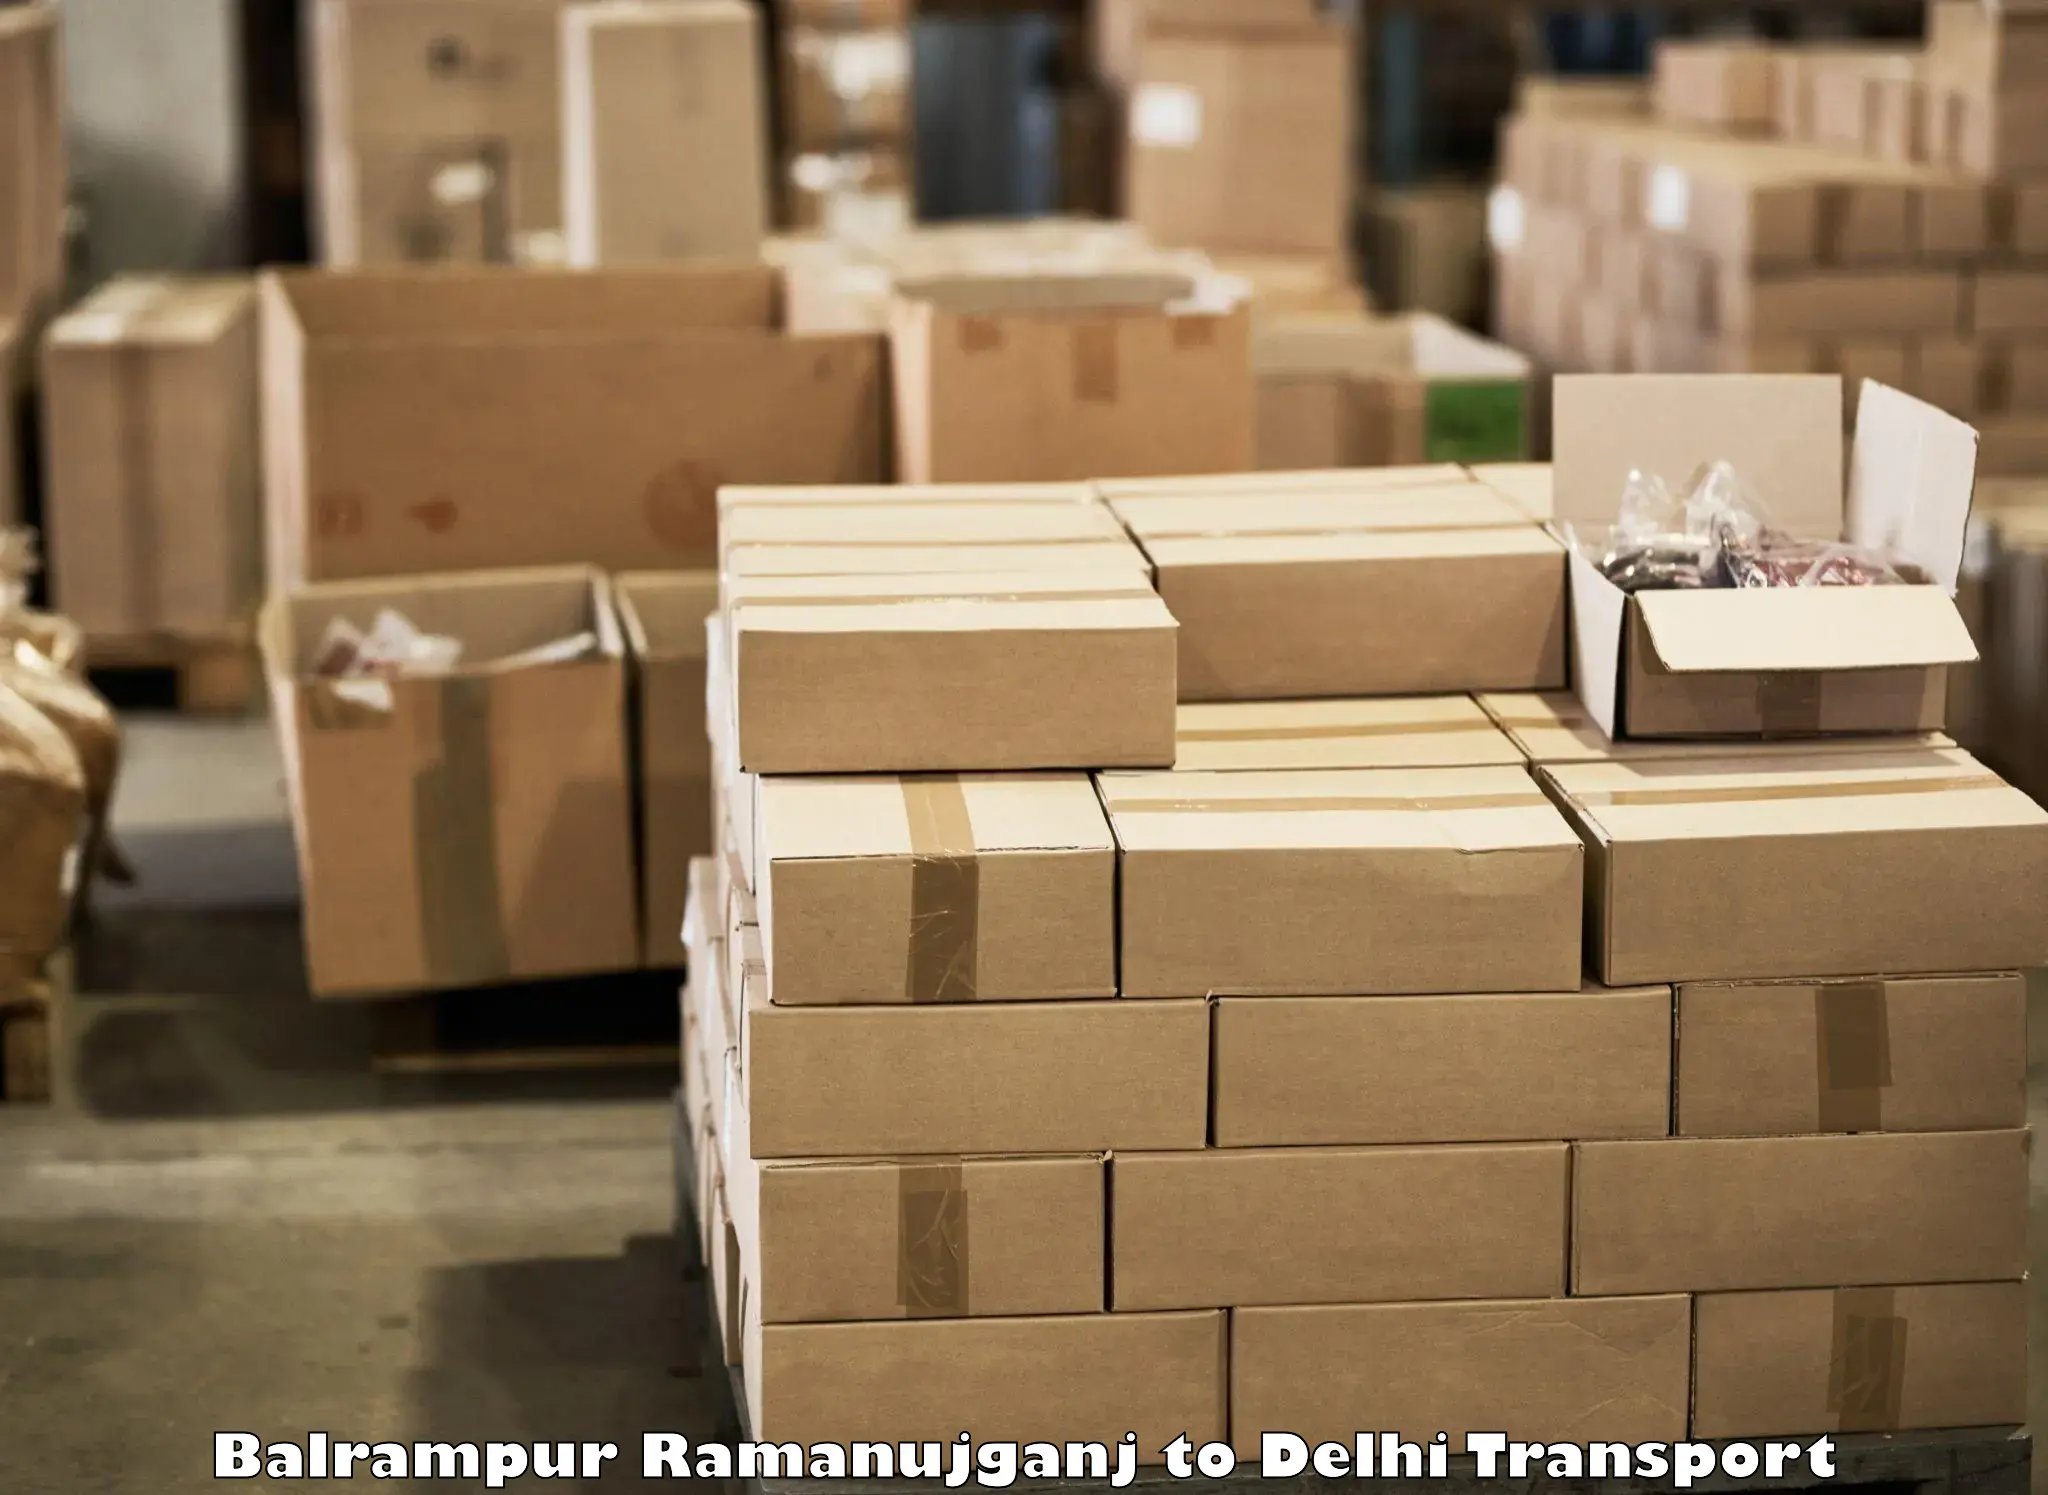 Goods delivery service Balrampur Ramanujganj to East Delhi